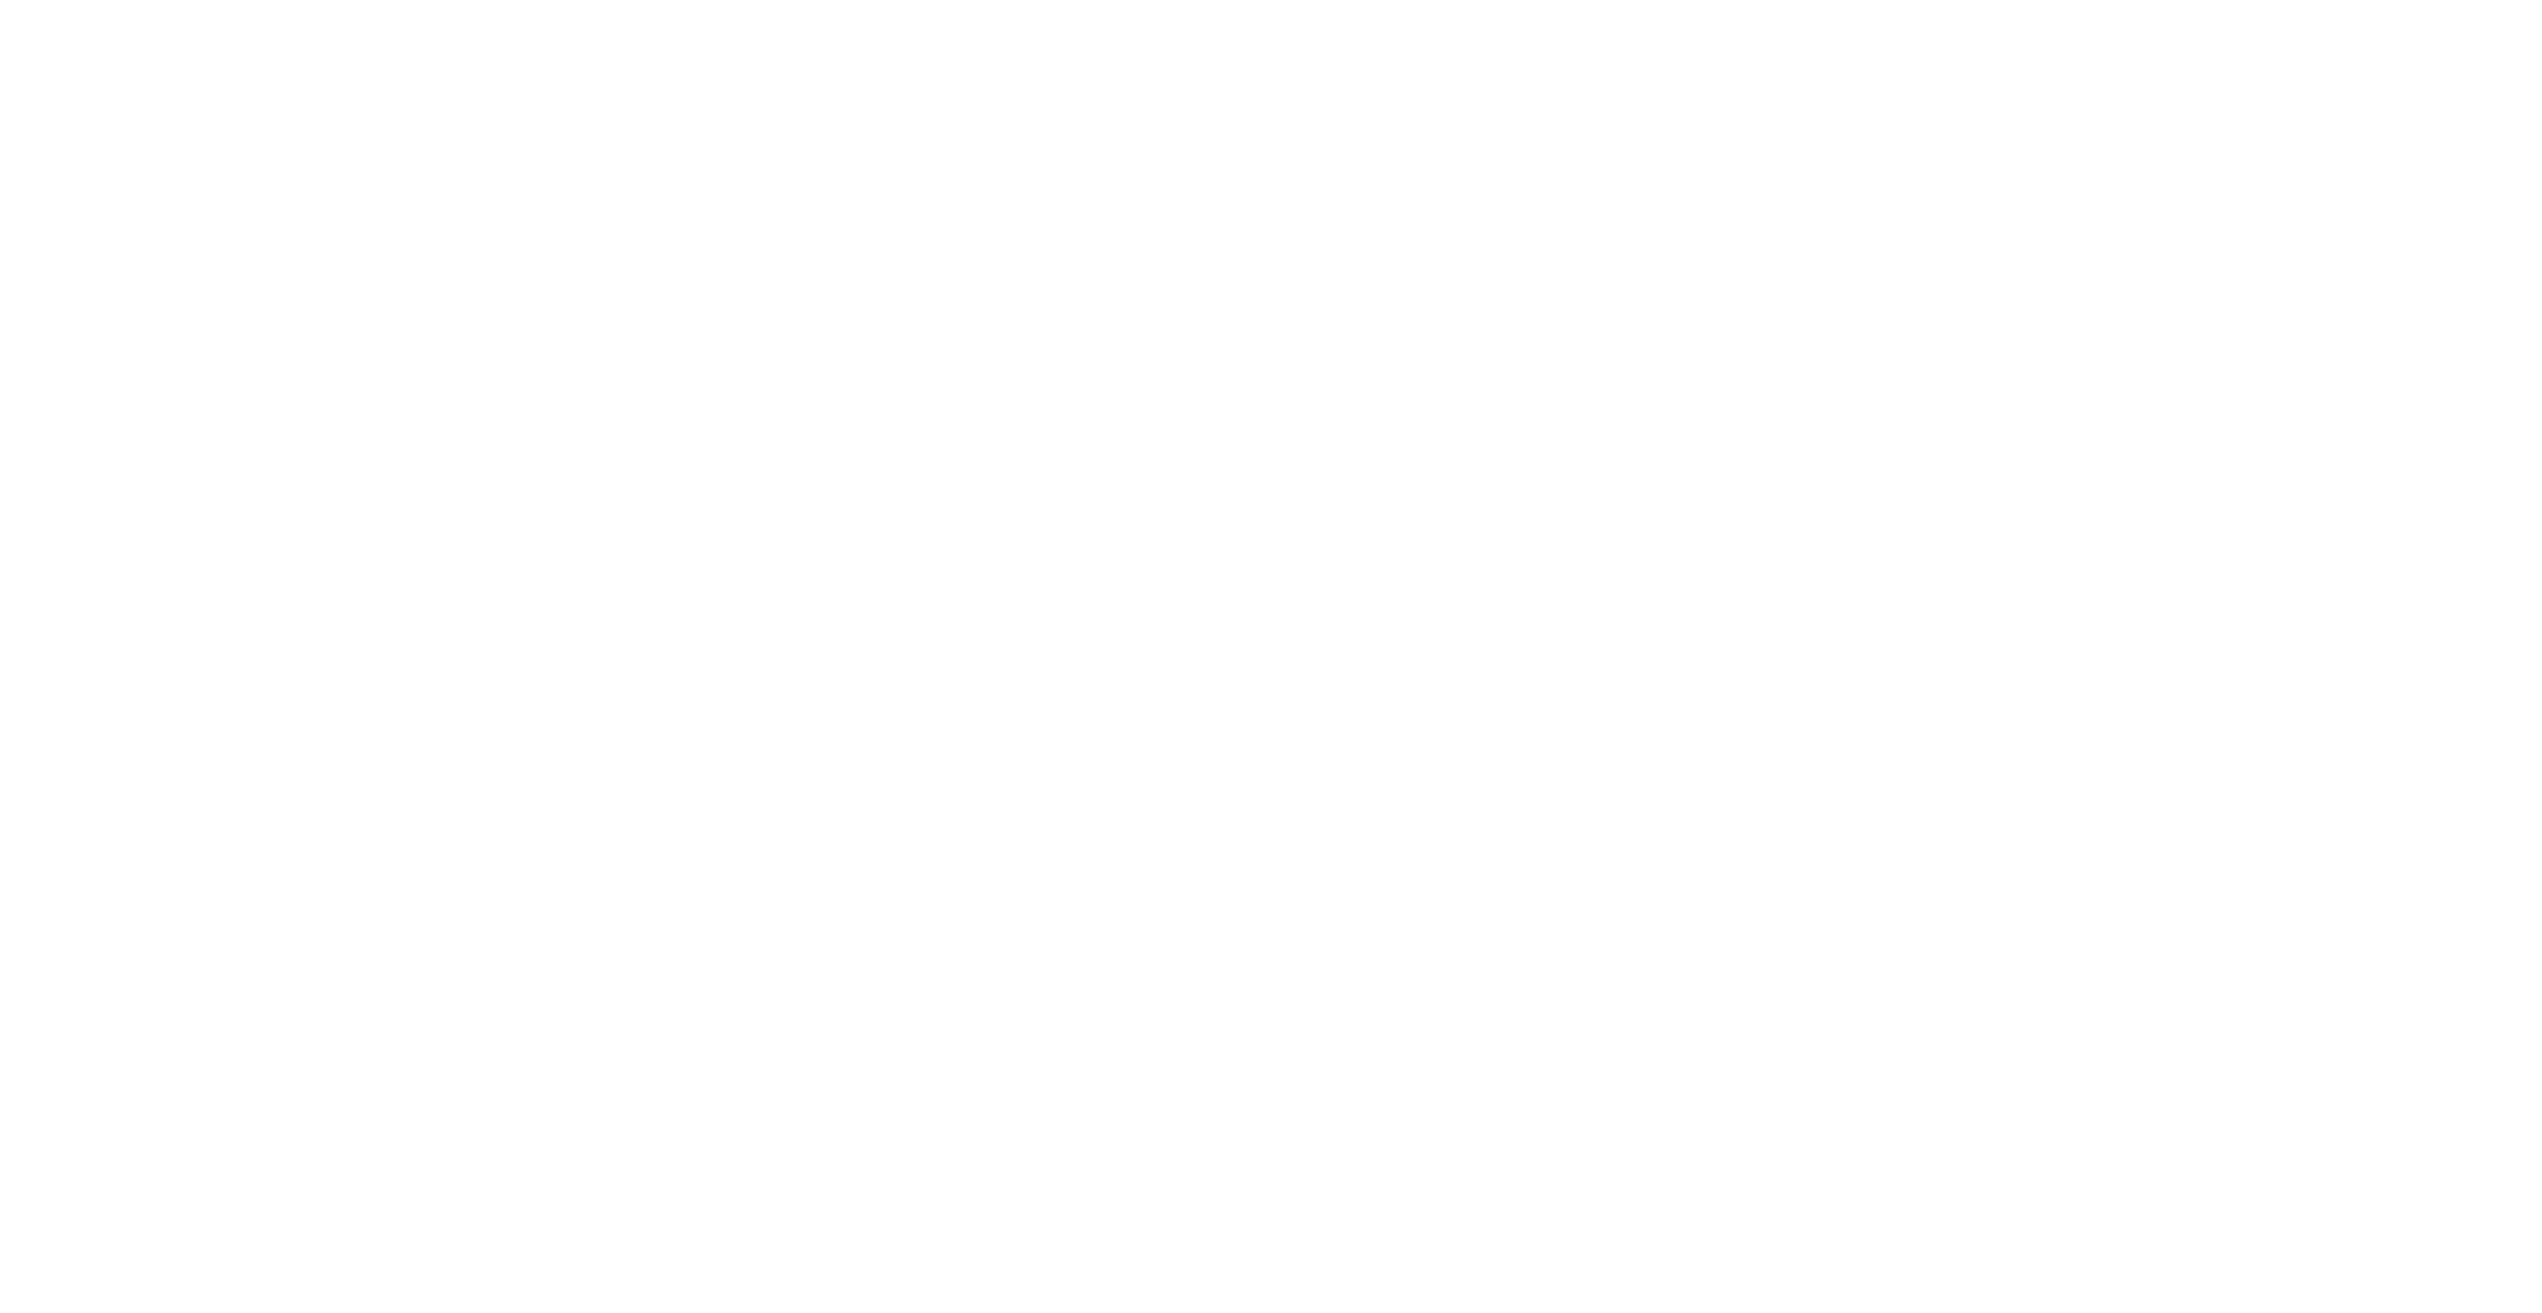 The Lee Company